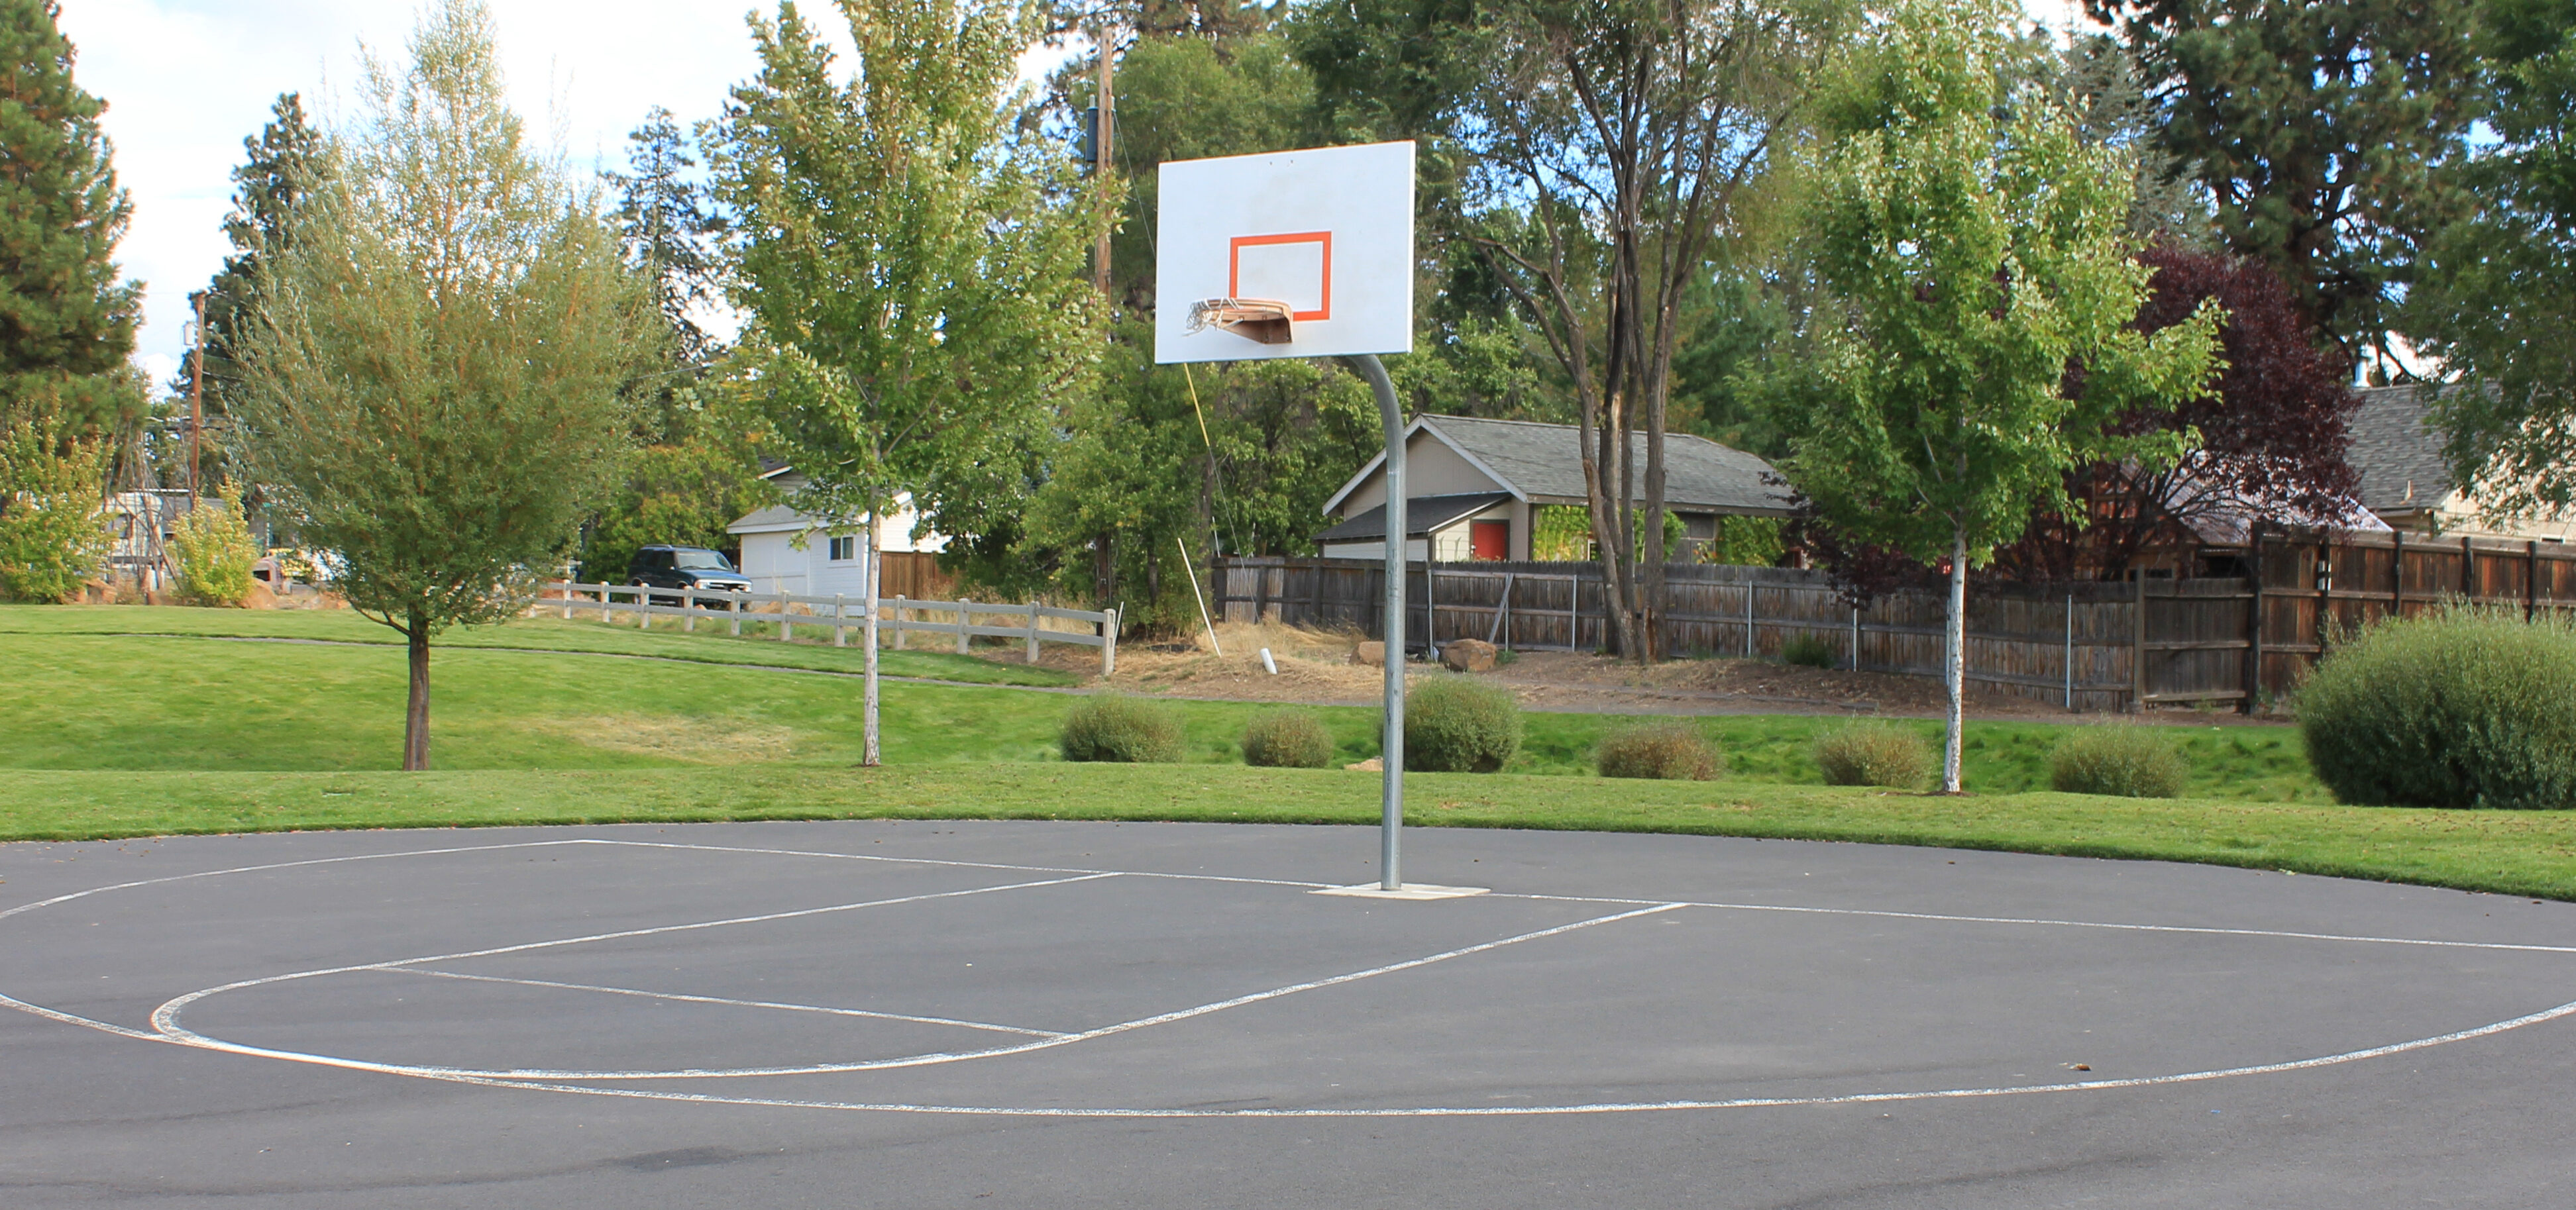 Orchard Park basketball court